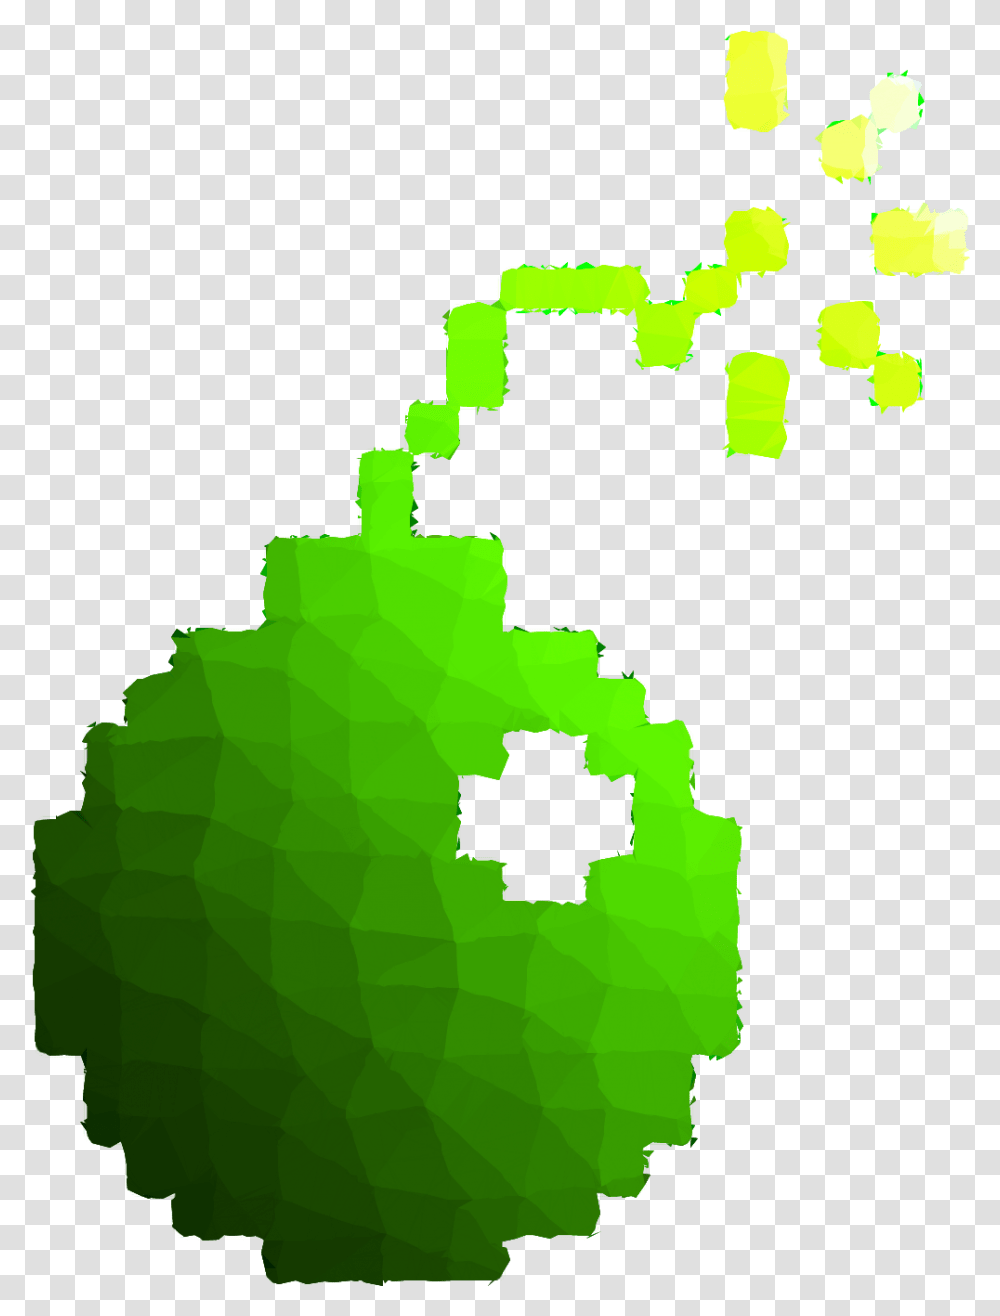 Gif Animation Image Pixel Art Emoticon Pixel Art Spiderman Logo, Green, Recycling Symbol Transparent Png